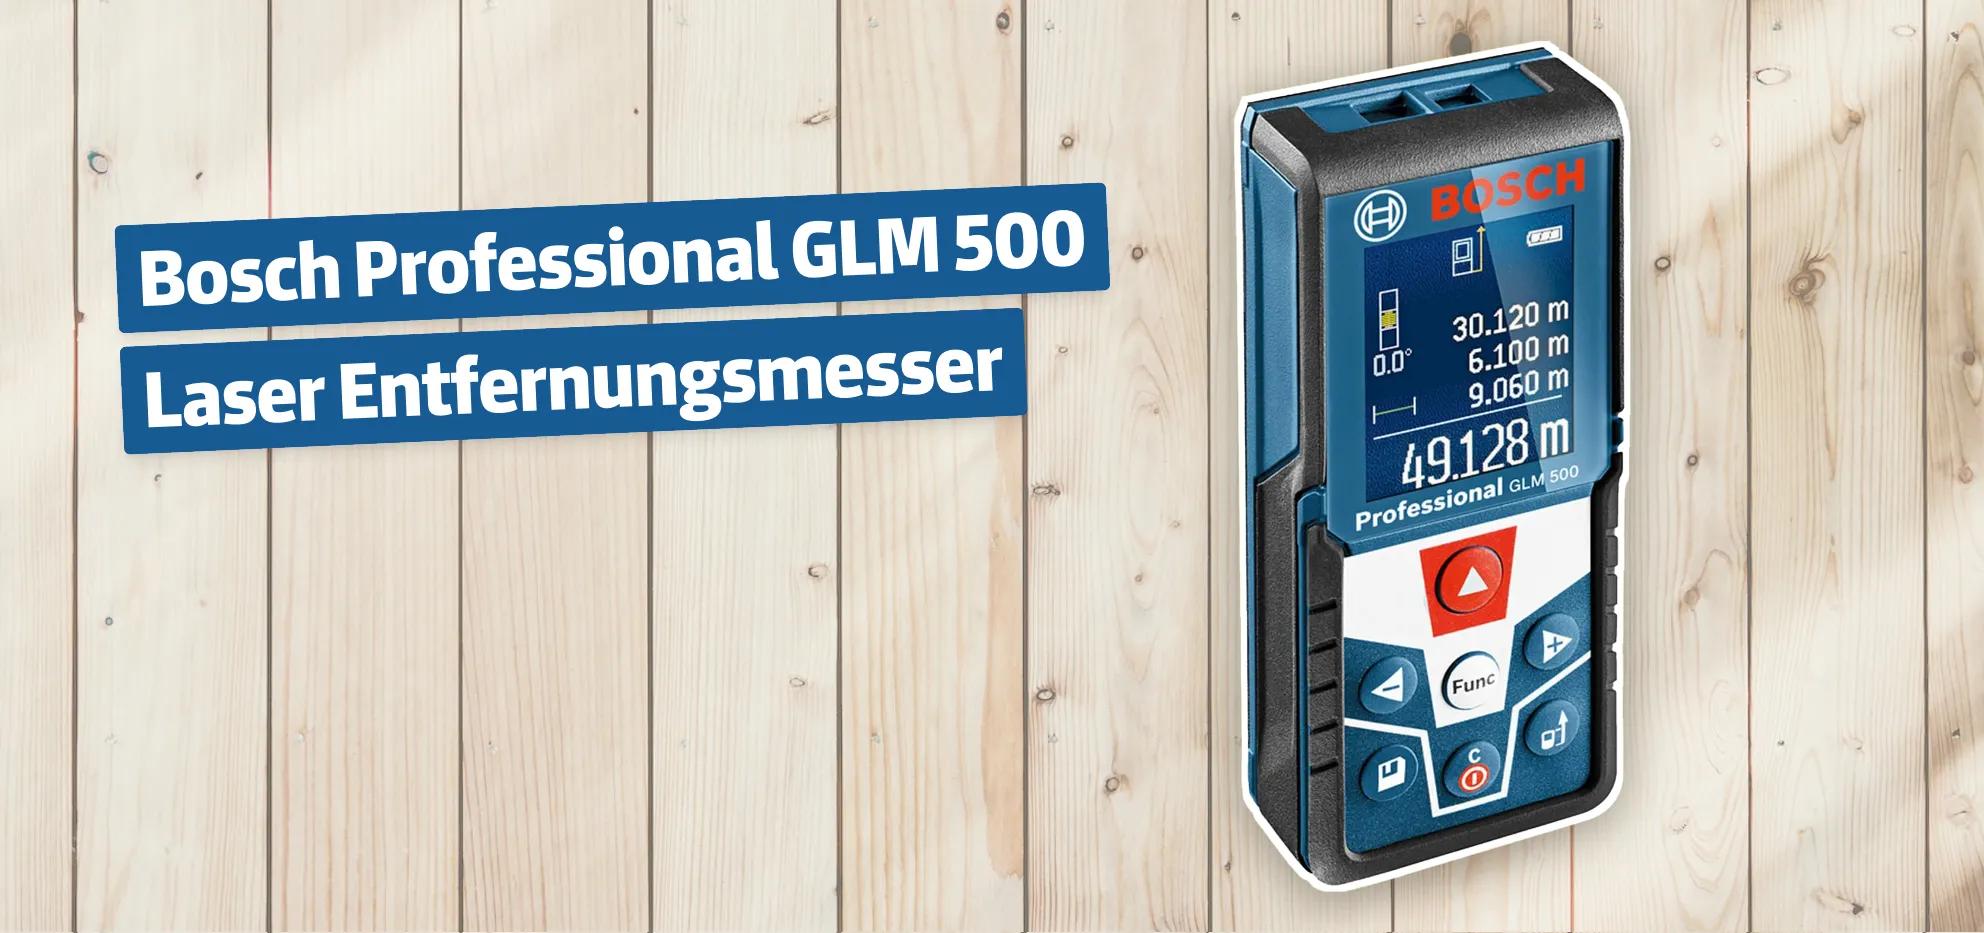 Bosch Professional GLM 500 Laser Entfernungsmesser